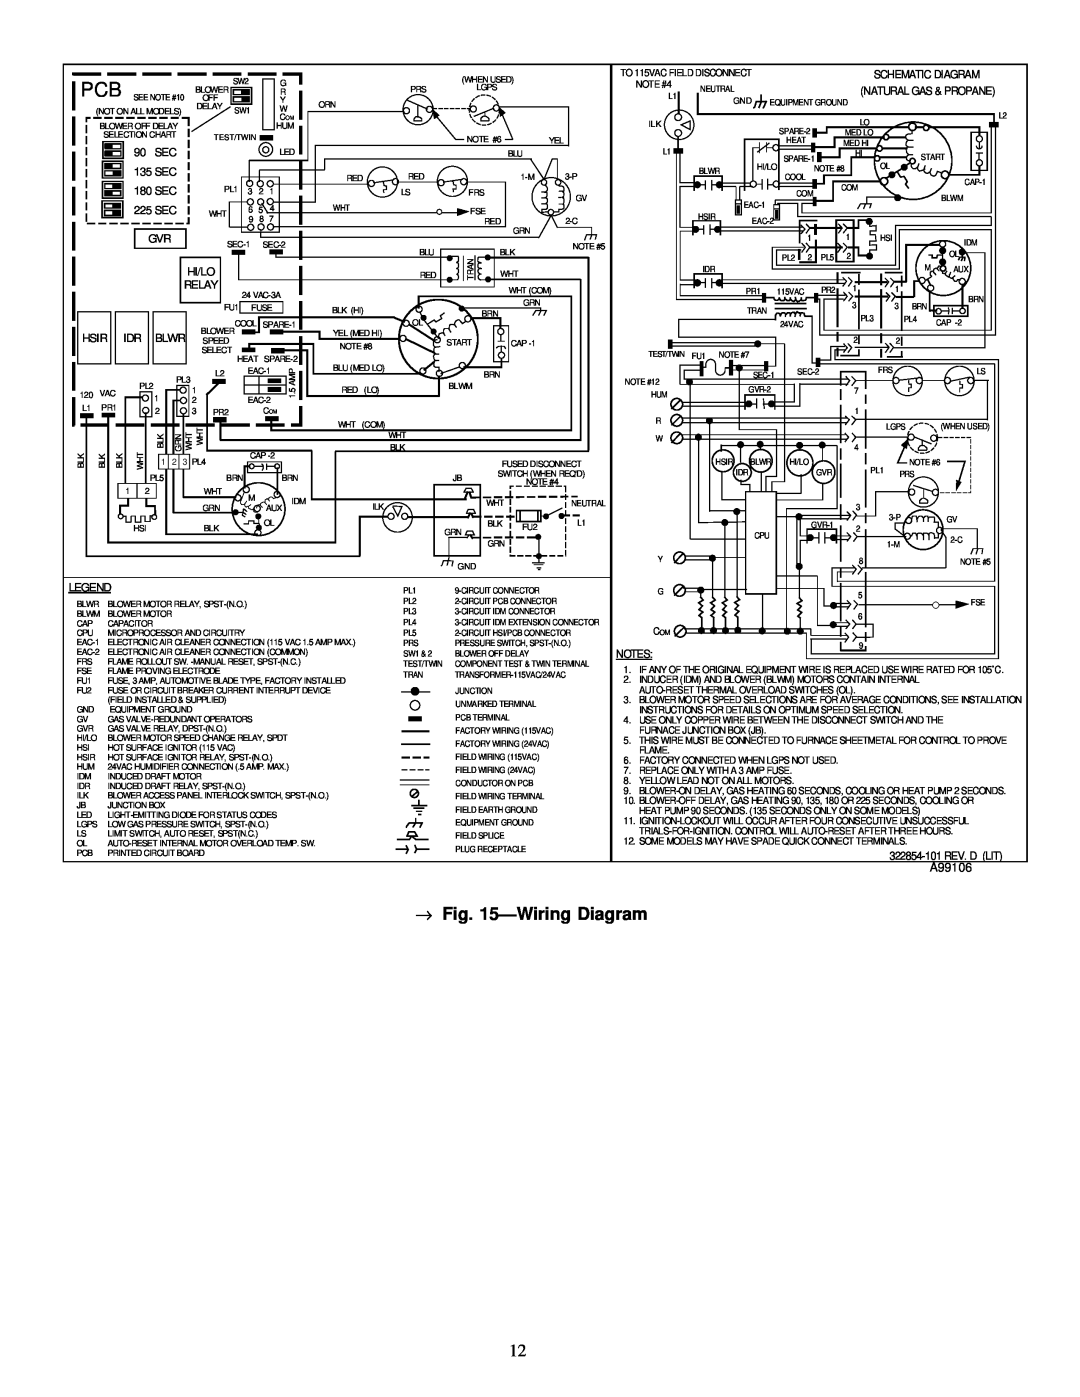 Carrier 58MSA instruction manual → ÐWiring Diagram, Schematic Diagram, Hsir, 322854-101REV. D LIT, A99106 